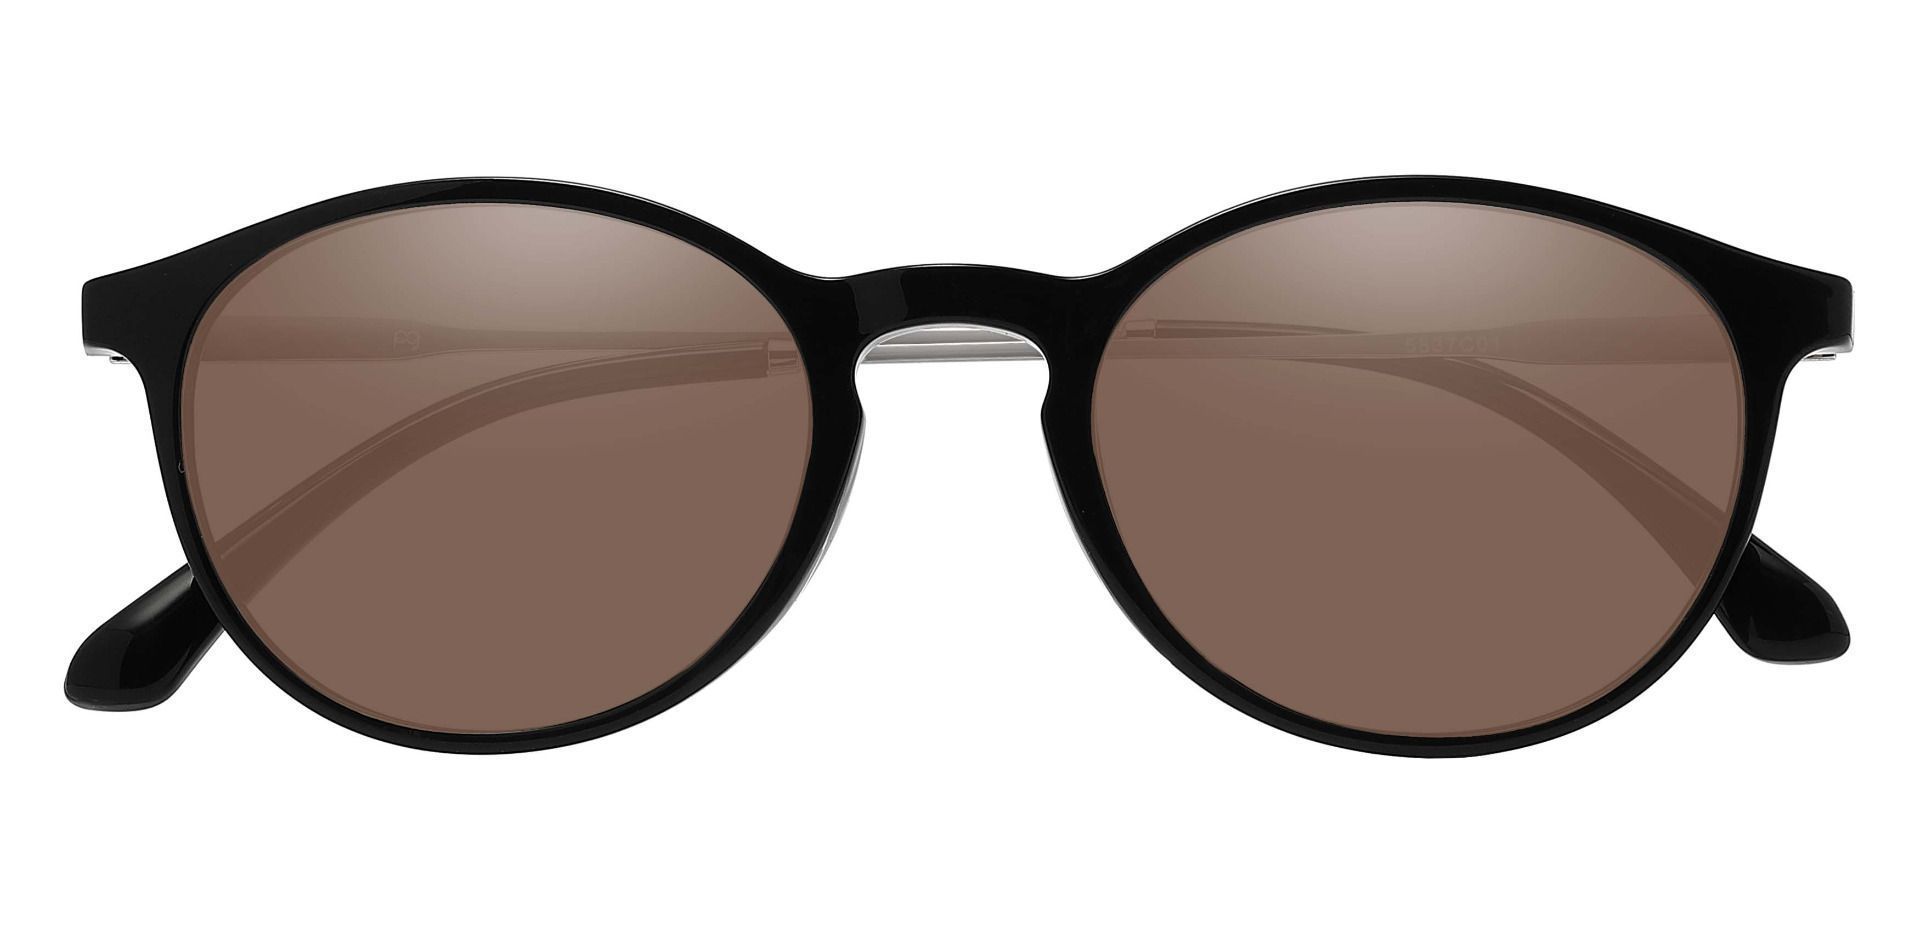 Felton Oval Reading Sunglasses - Black Frame With Brown Lenses